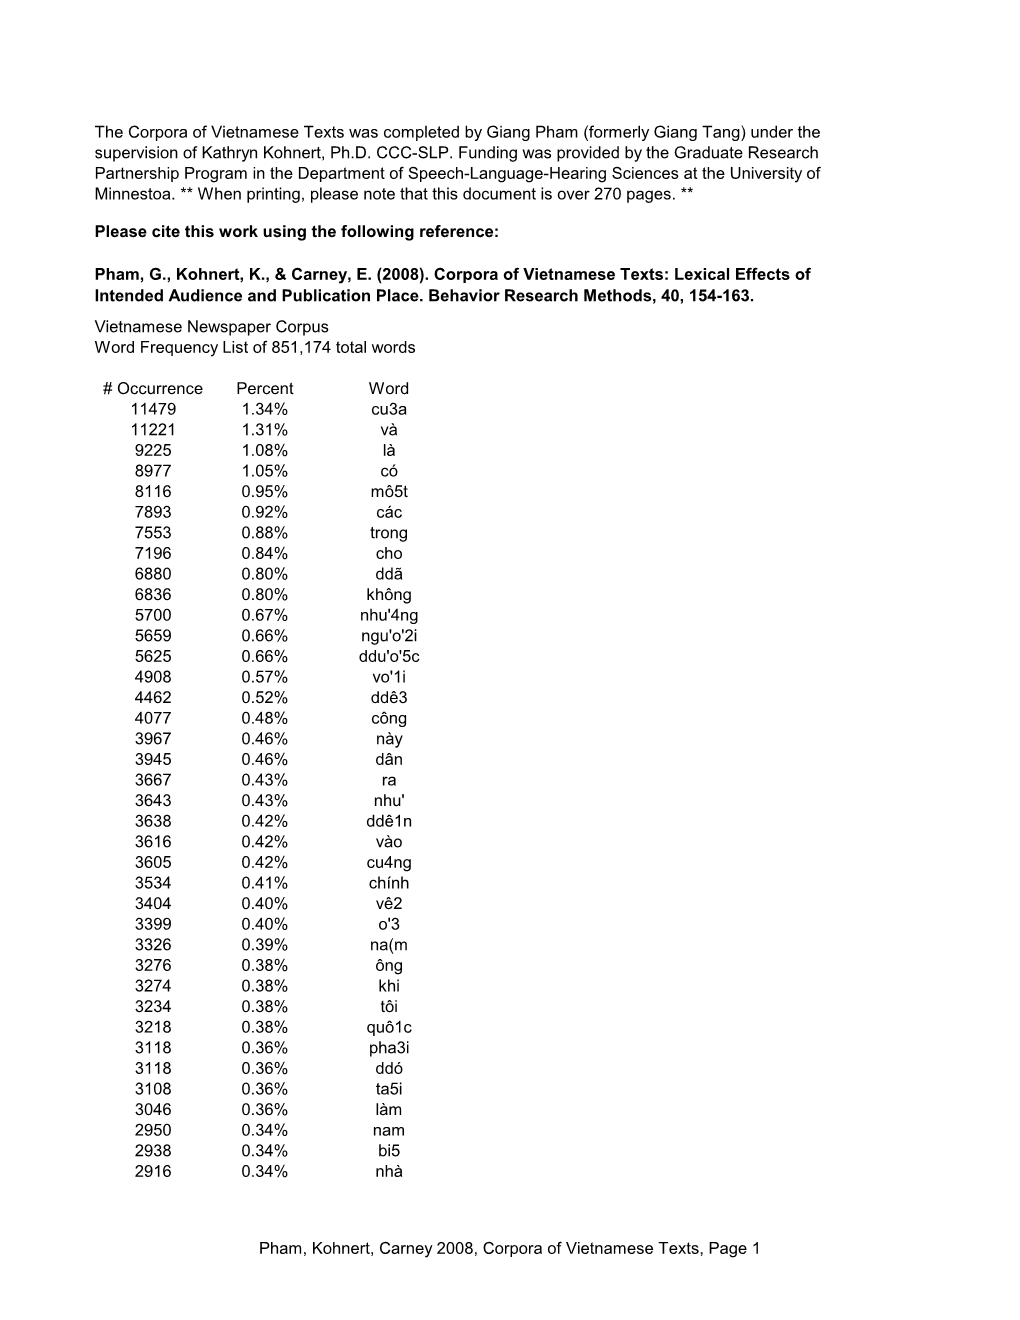 Vietnamese Newspaper Corpus Word Frequency List of 851,174 Total Words